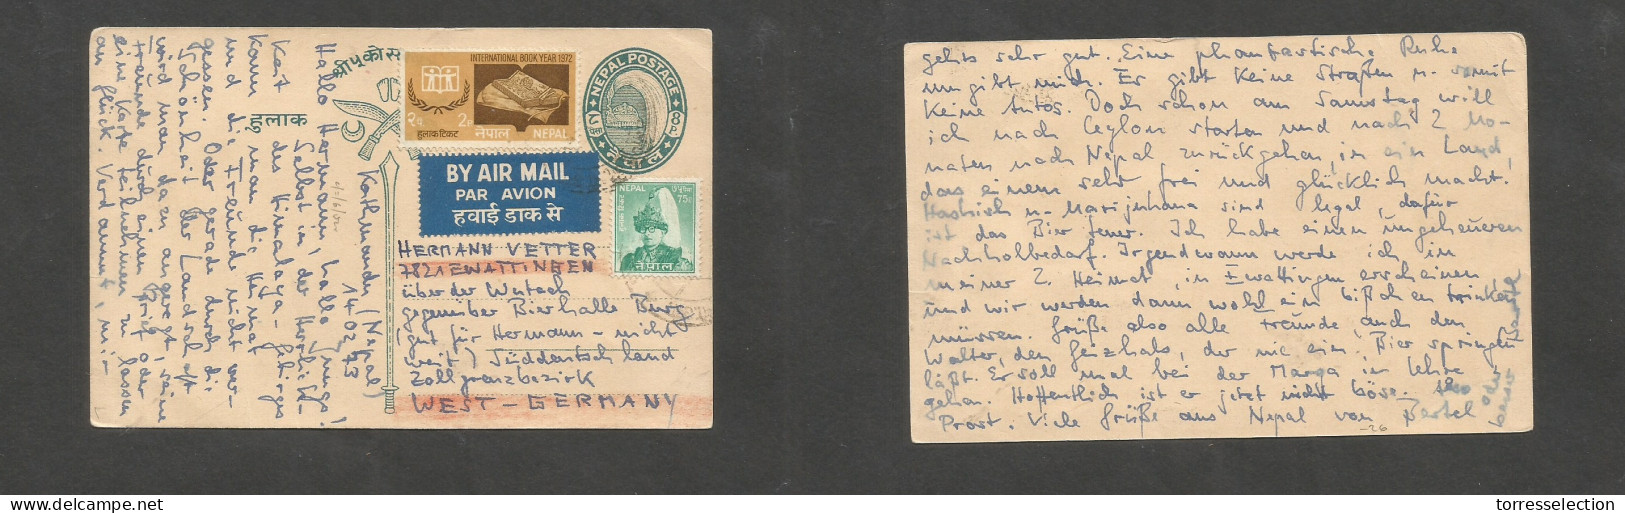 NEPAL. 1973 (14 Febr) Kathmandu - West Germany, Ewattineen. 8p Stat Card + 2 Adtls On Airmail Usage. Fine. SALE. - Népal